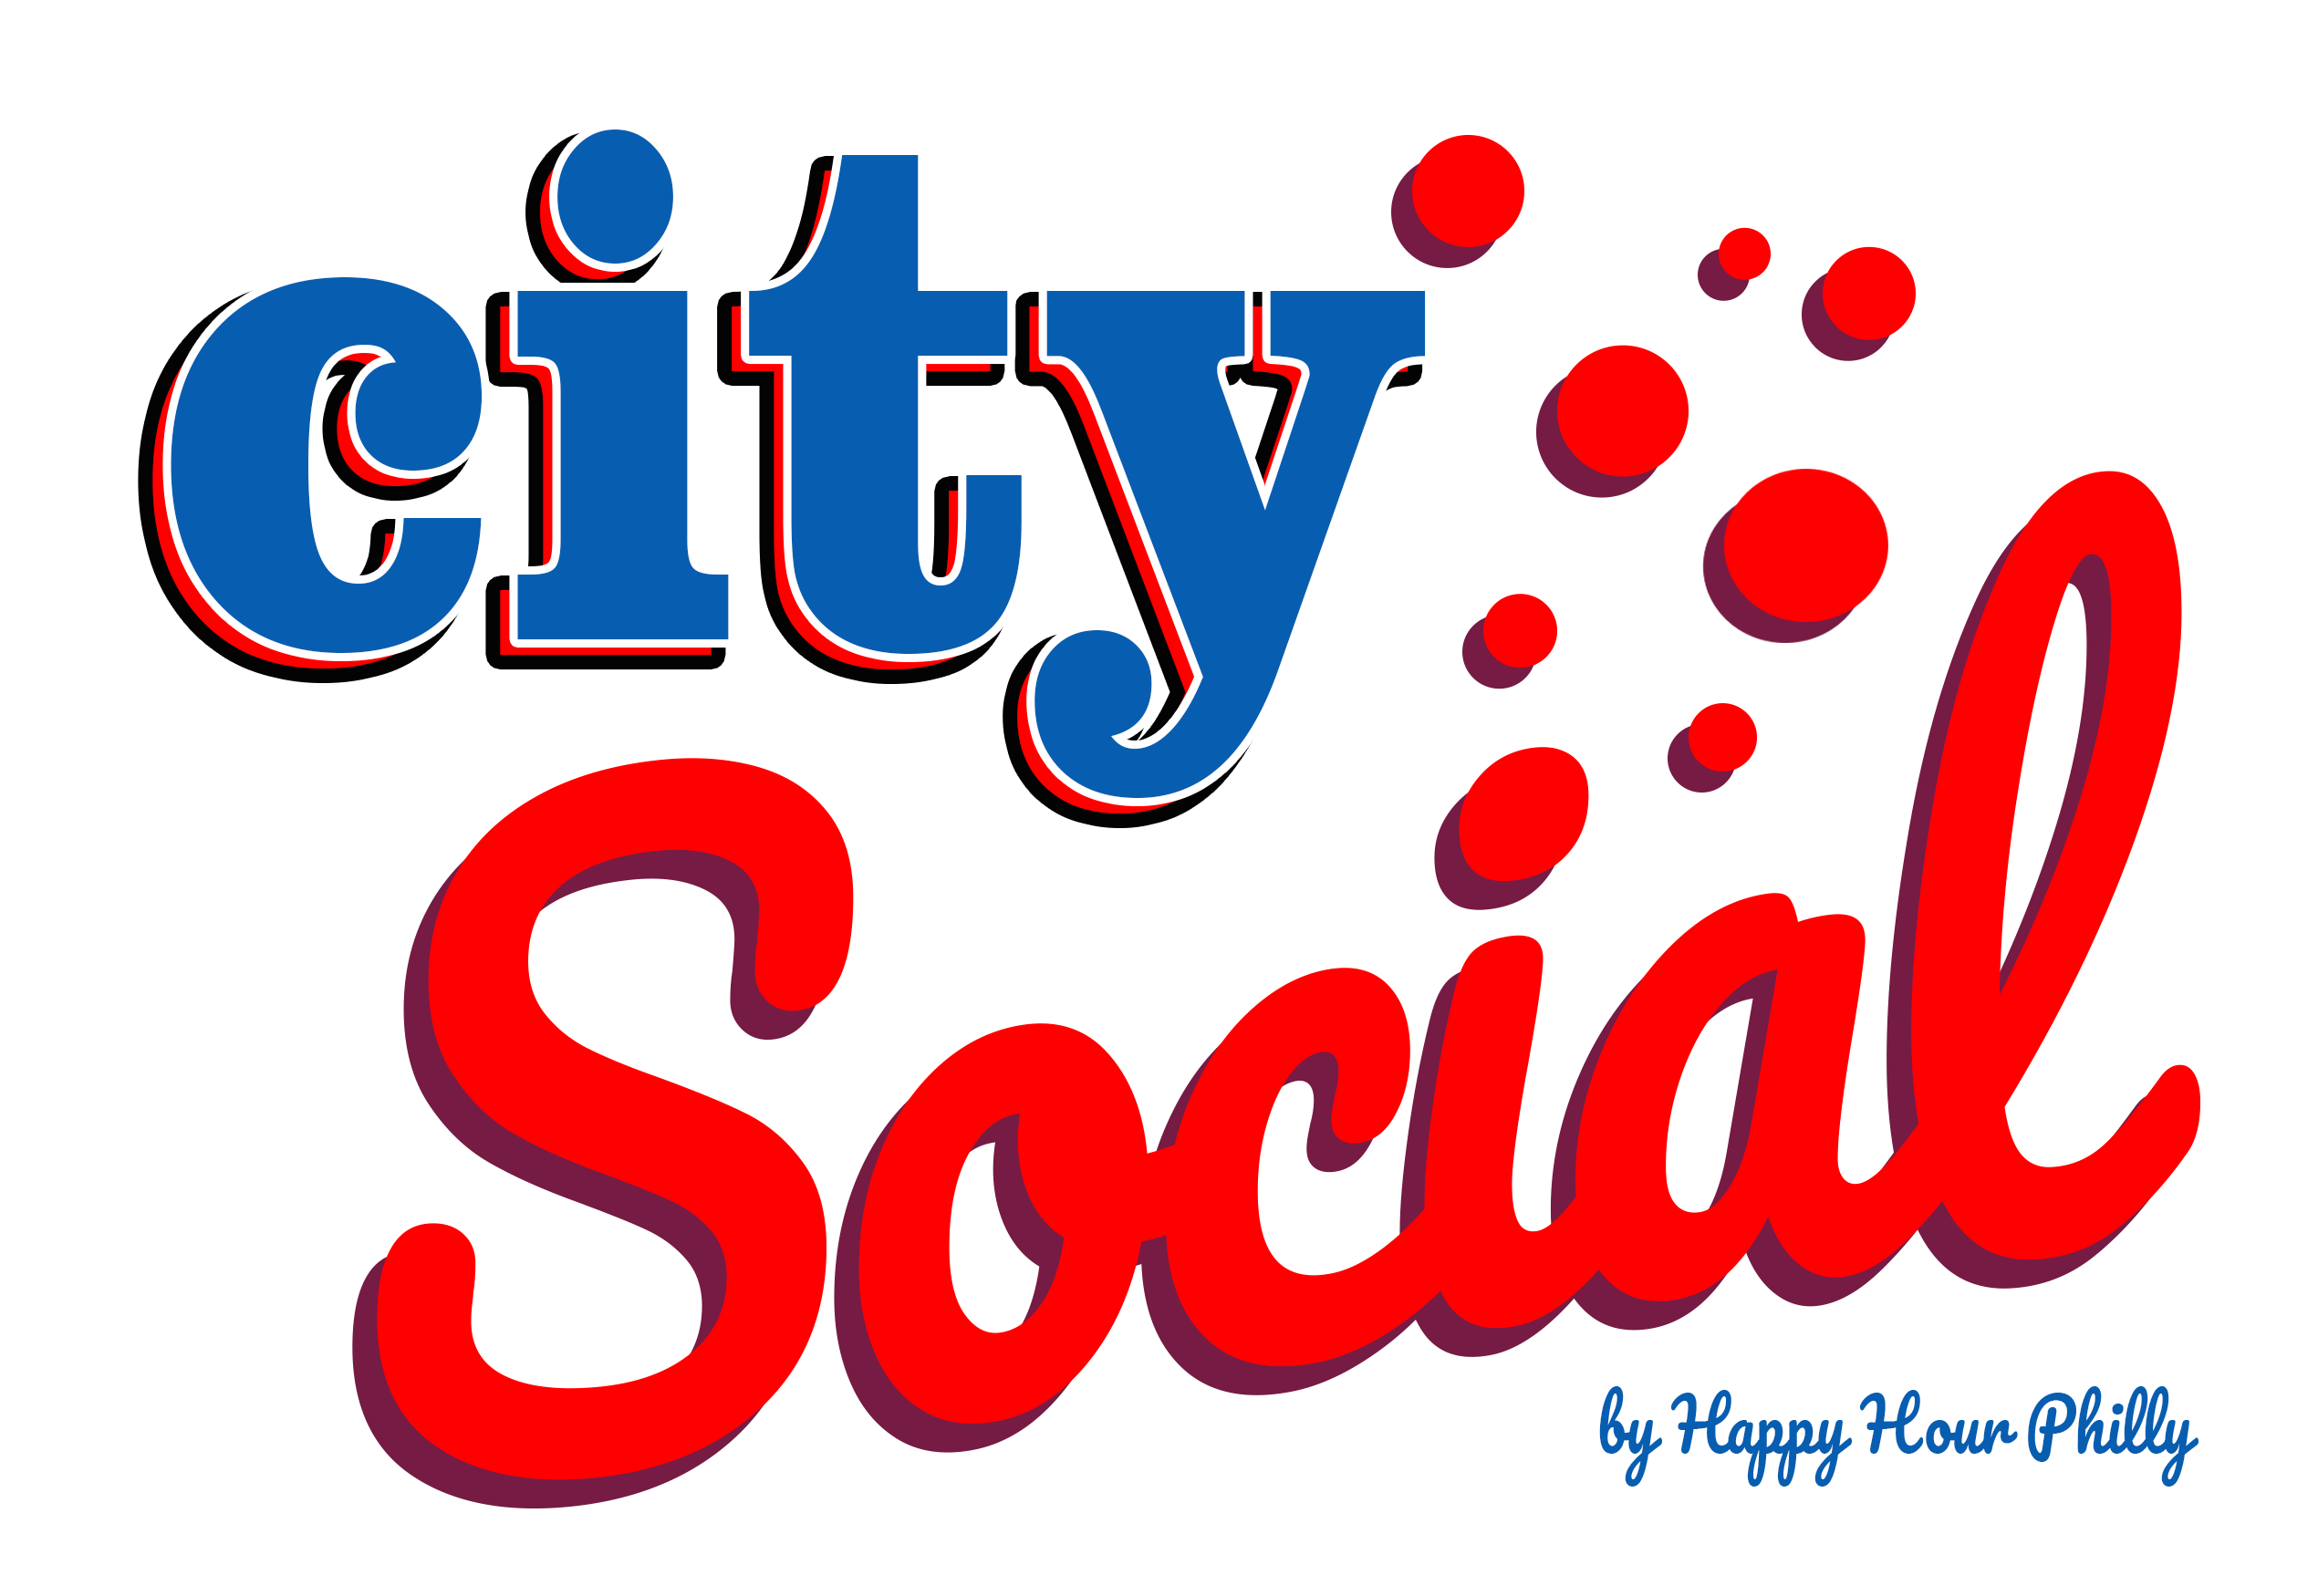 http://citysocialphilly.com/wp-content/uploads/2021/09/City-Social-Logo-2541x1750.png